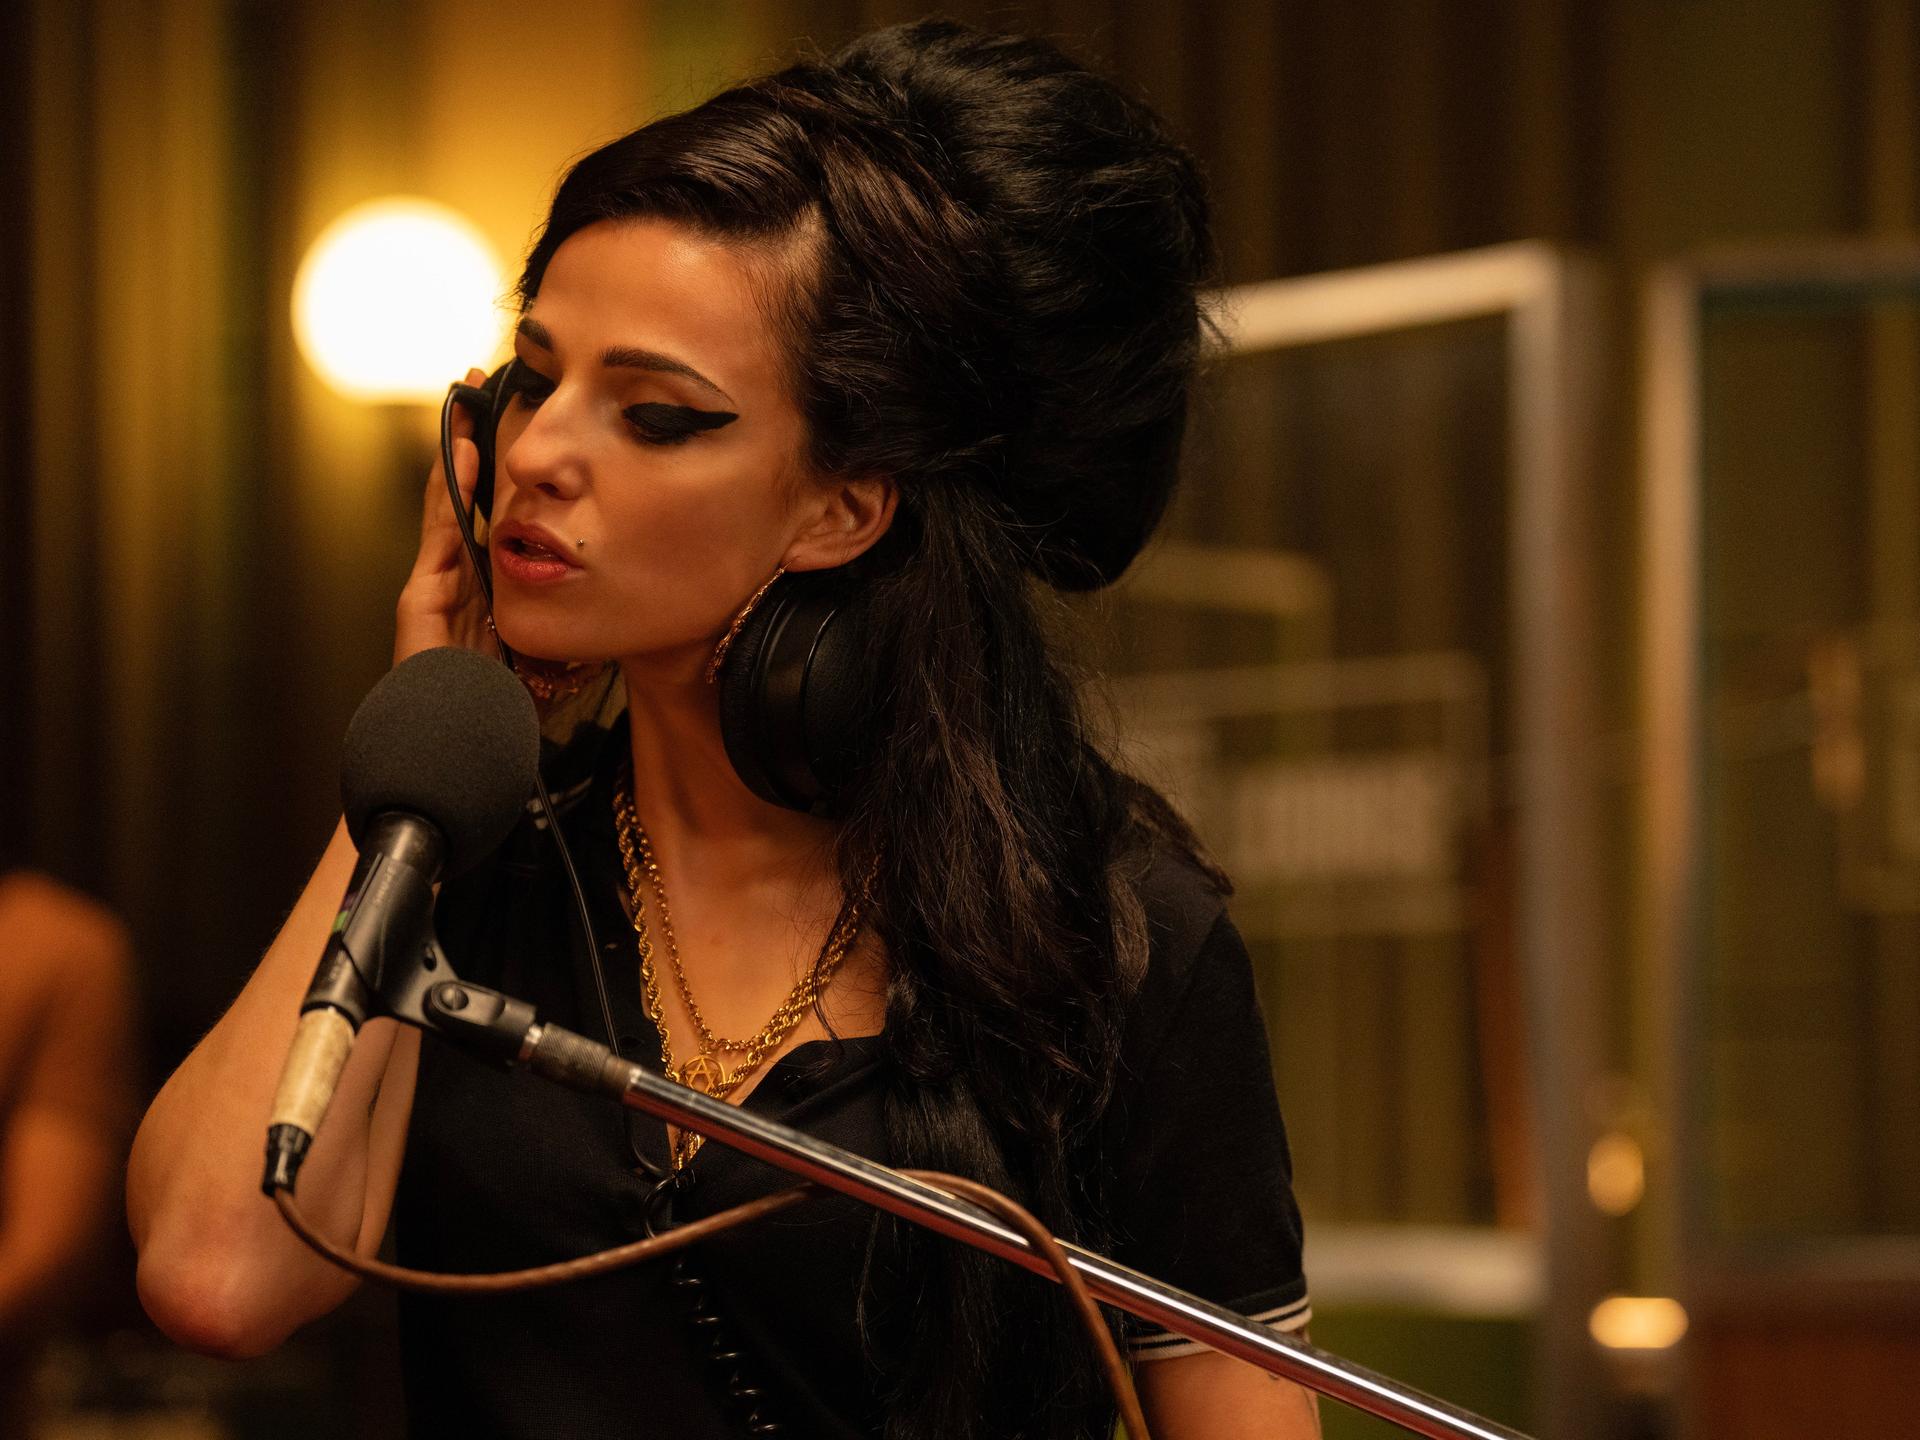 Marisa Abela als Amy Winehouse im Film "Back to Black".